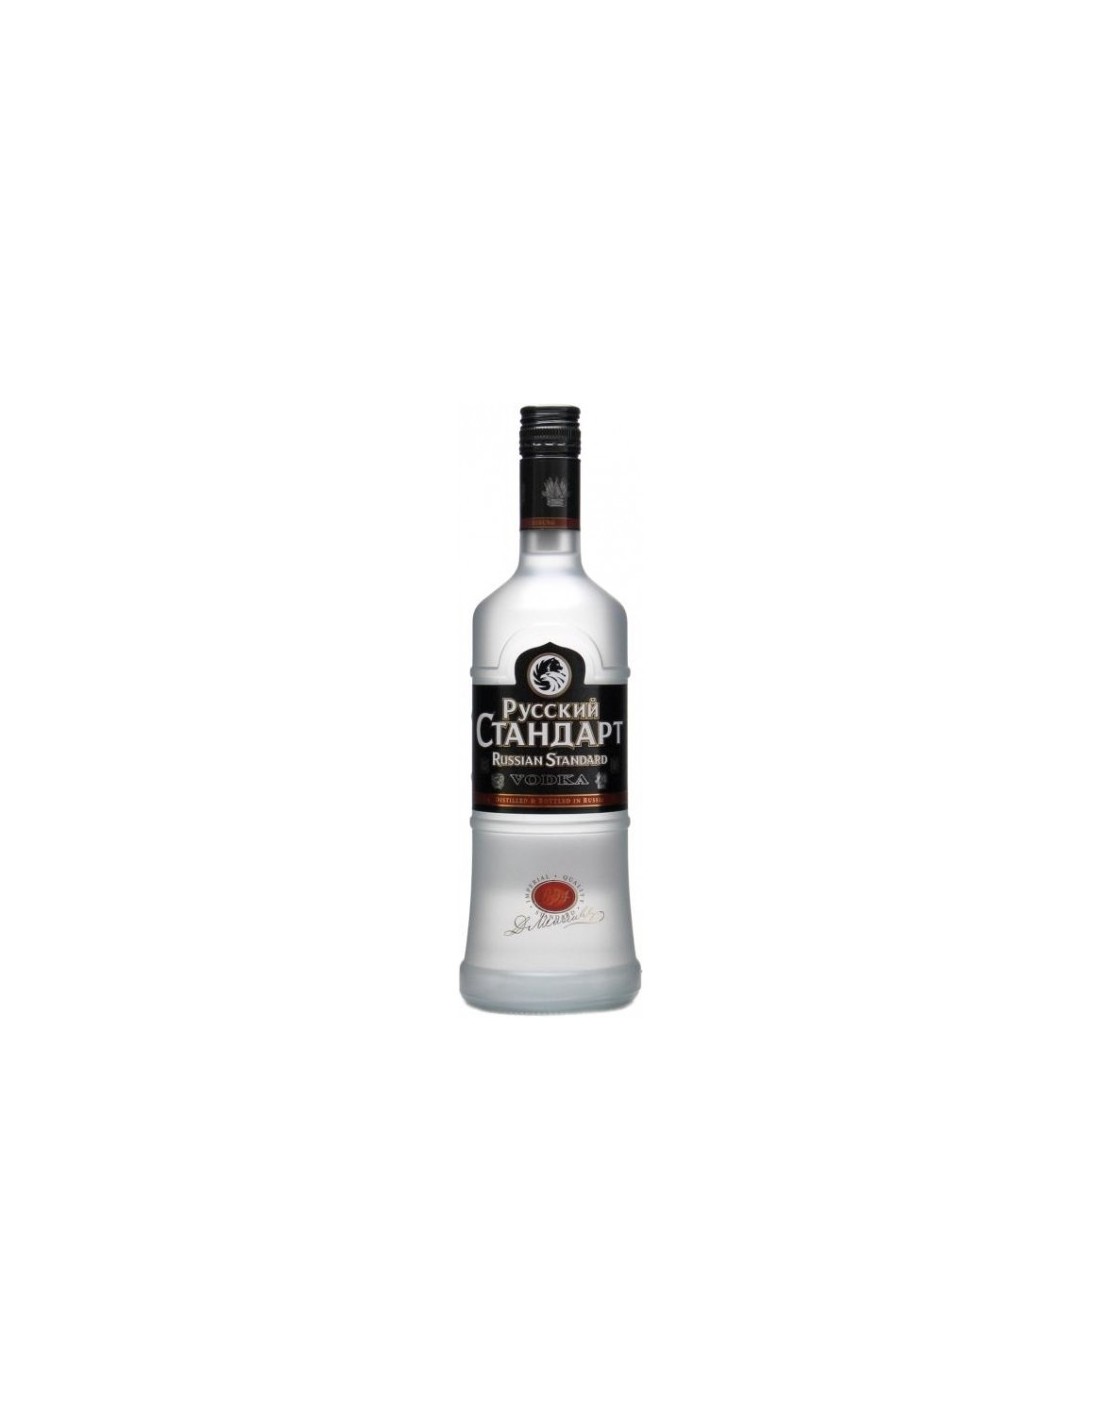 Vodca Russian Standard Original 3L, 40% alc., Rusia alcooldiscount.ro